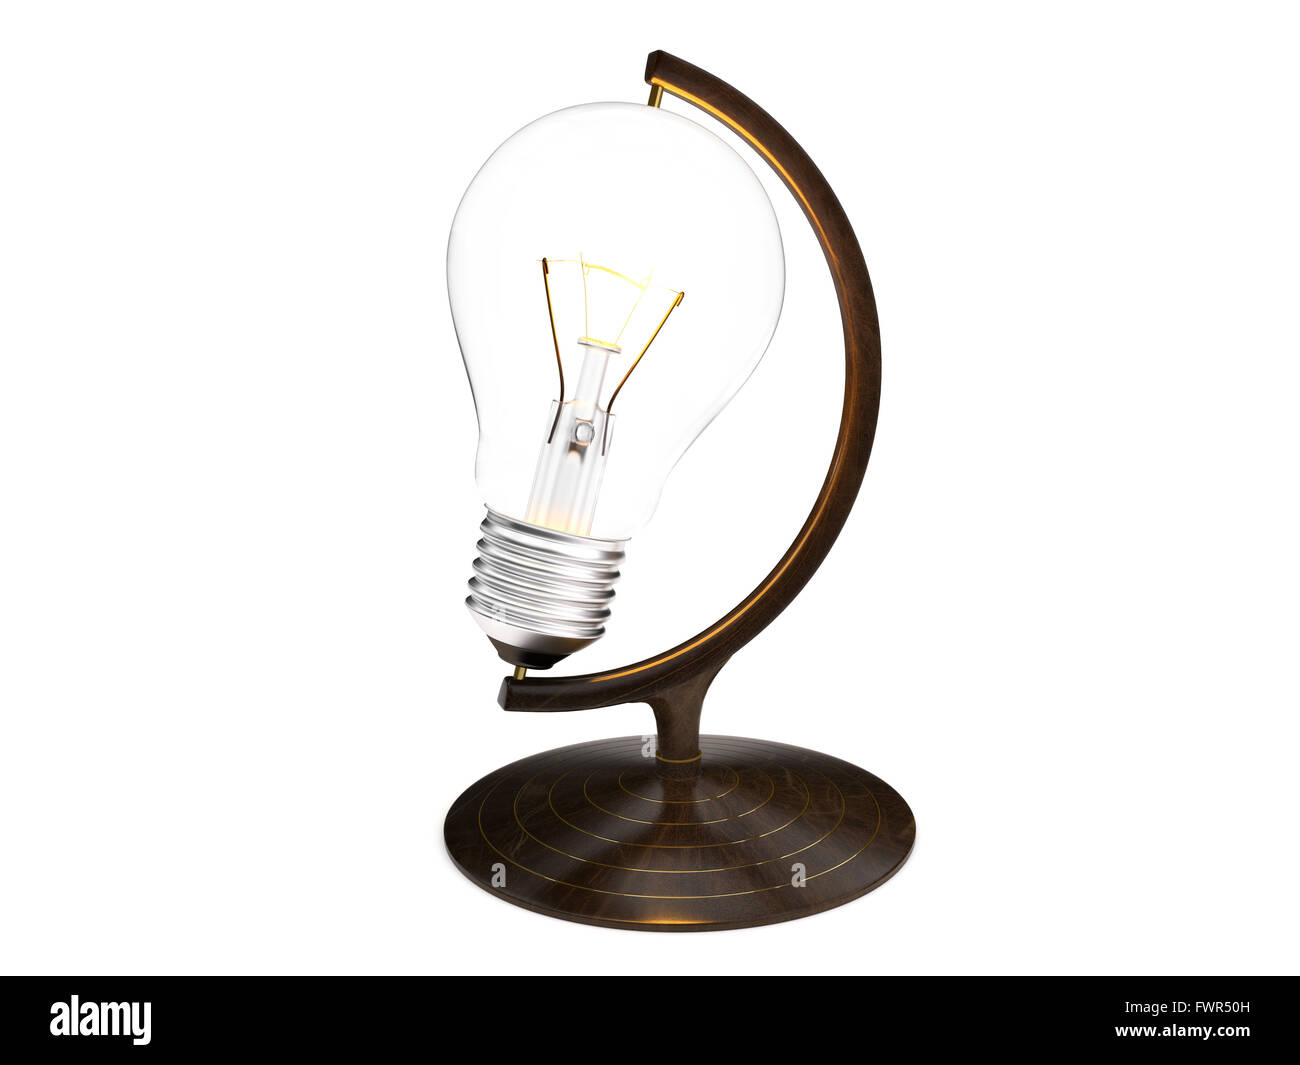 Idea light bulb globe isolated on a white background. Stock Photo